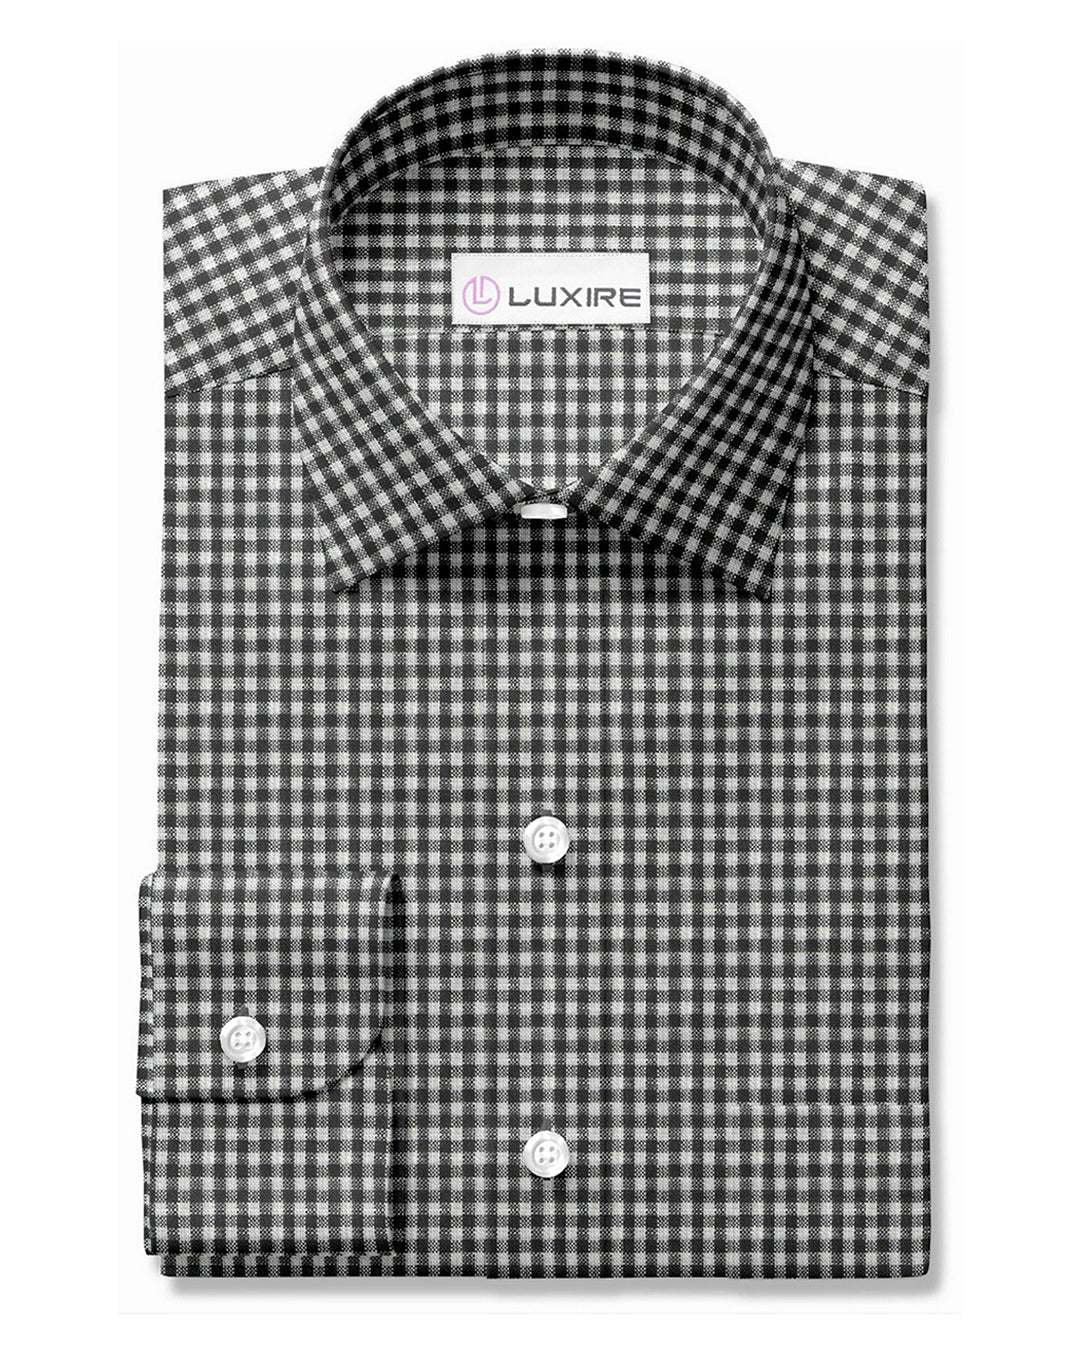 Front view of custom linen shirt for men in black and white gingham